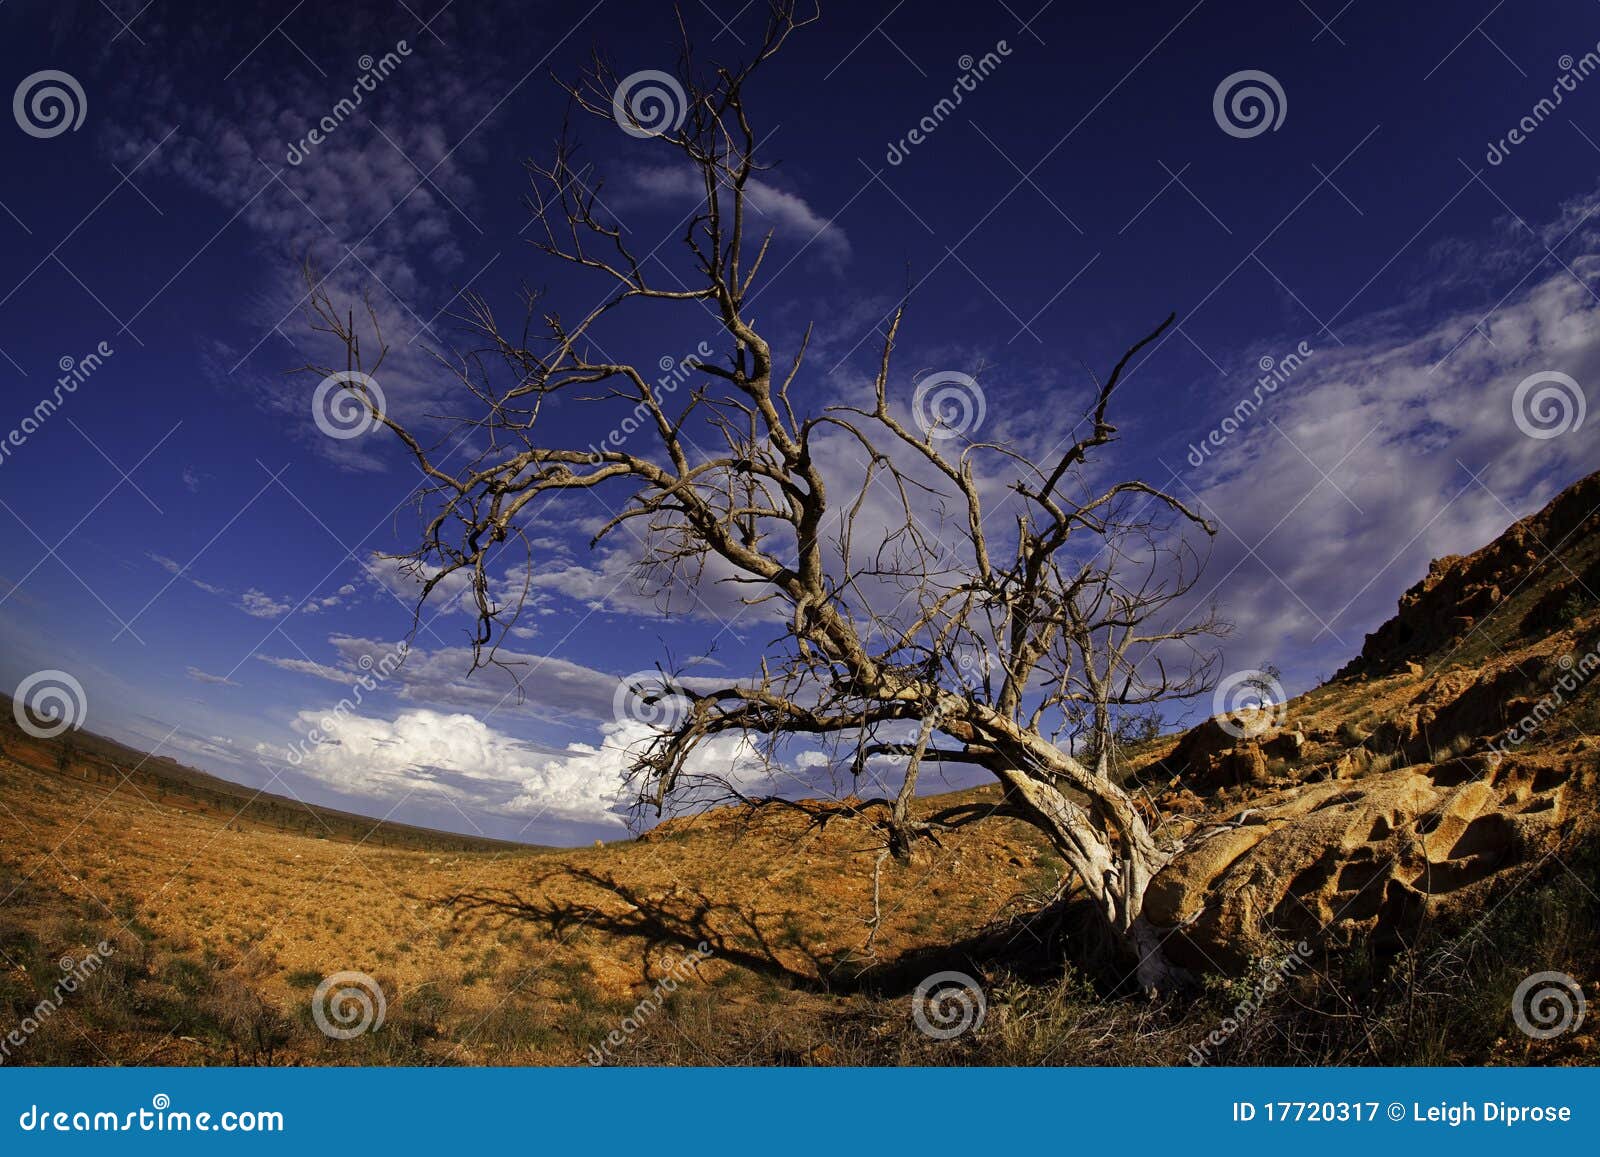 barren tree in desert